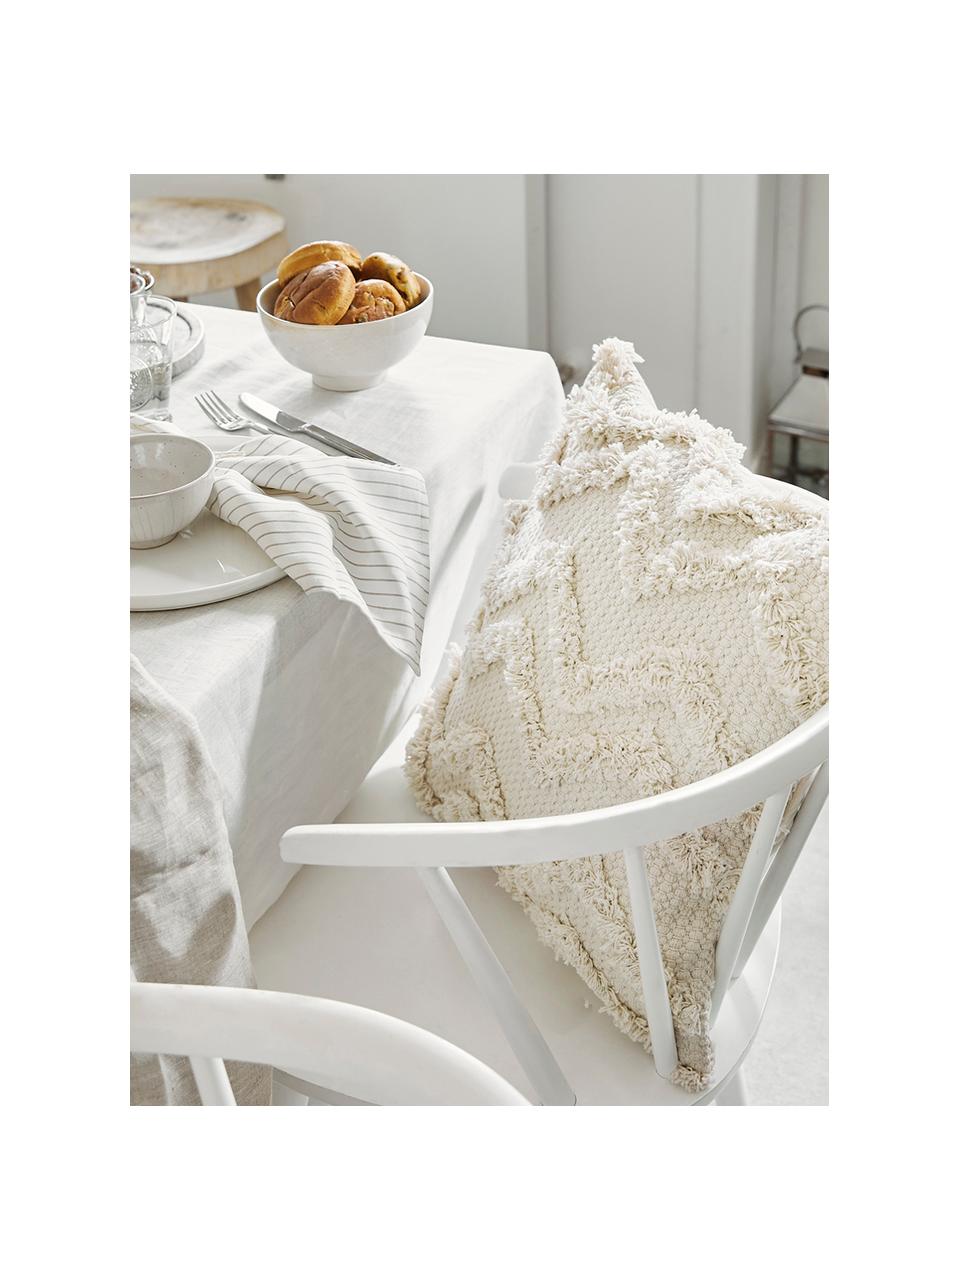 Kissenhülle Akesha mit getuftetem Zickzack-Muster, 100% Baumwolle, Off White, B 45 x L 45 cm